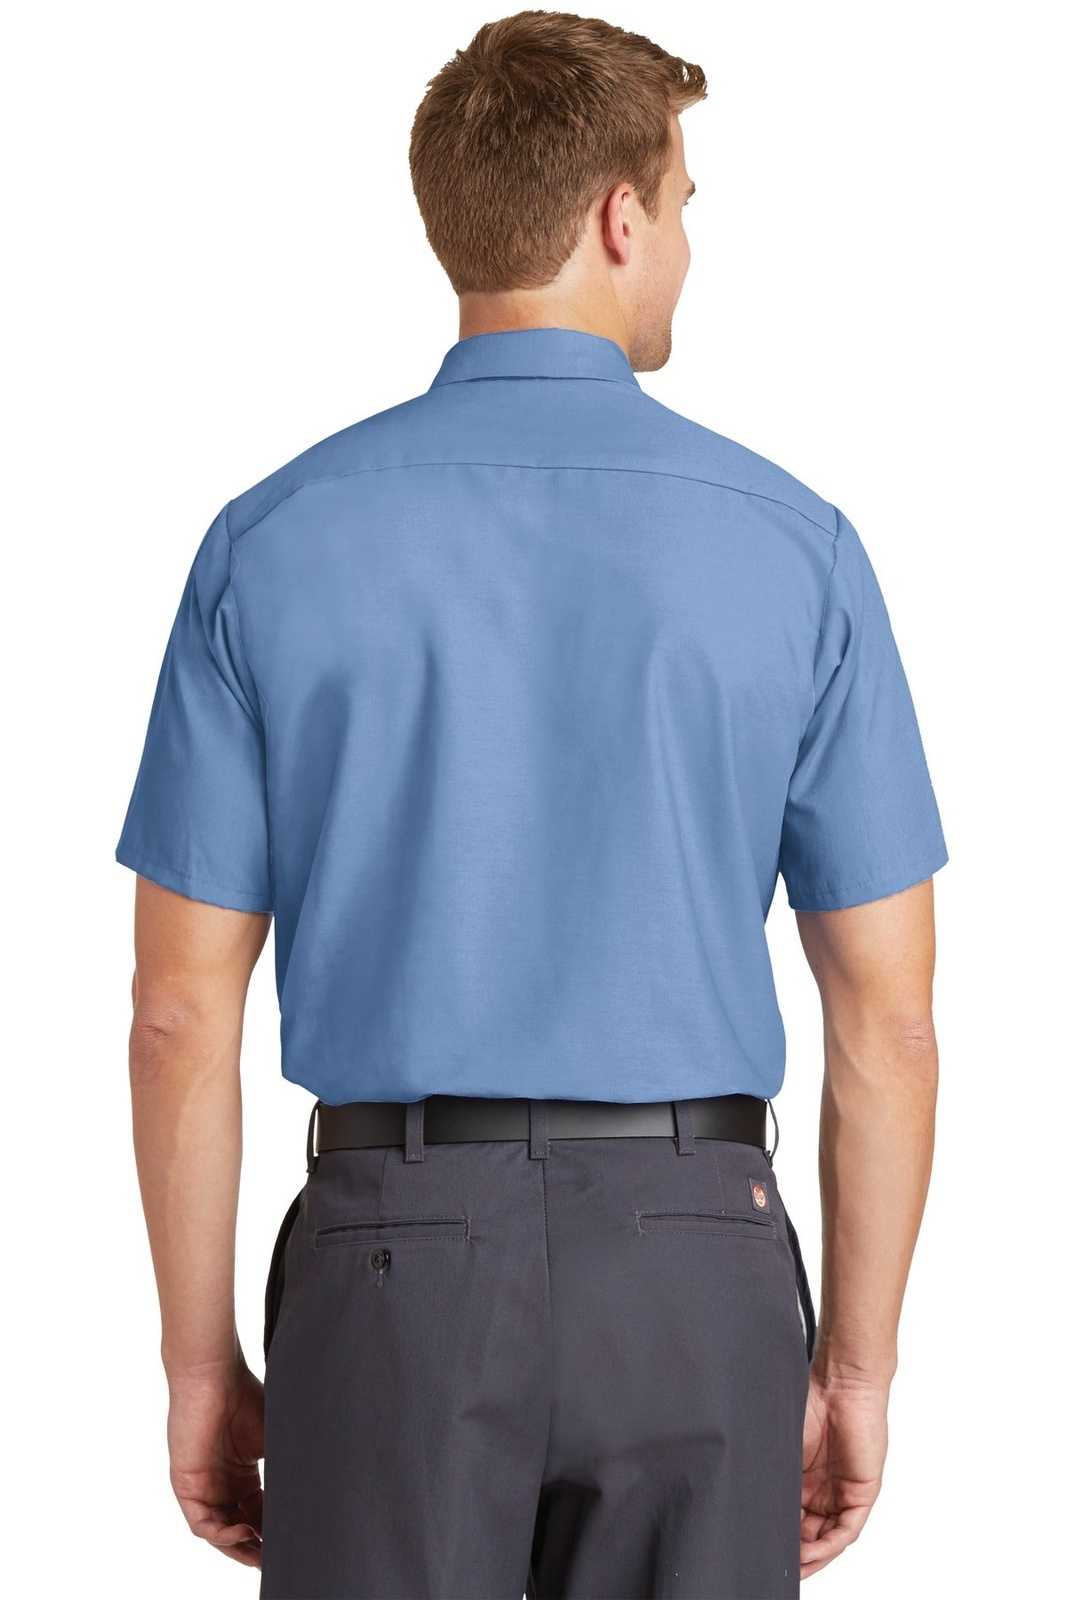 Red Kap SP24 Short Sleeve Industrial Work Shirt - Petrol Blue - HIT a Double - 2